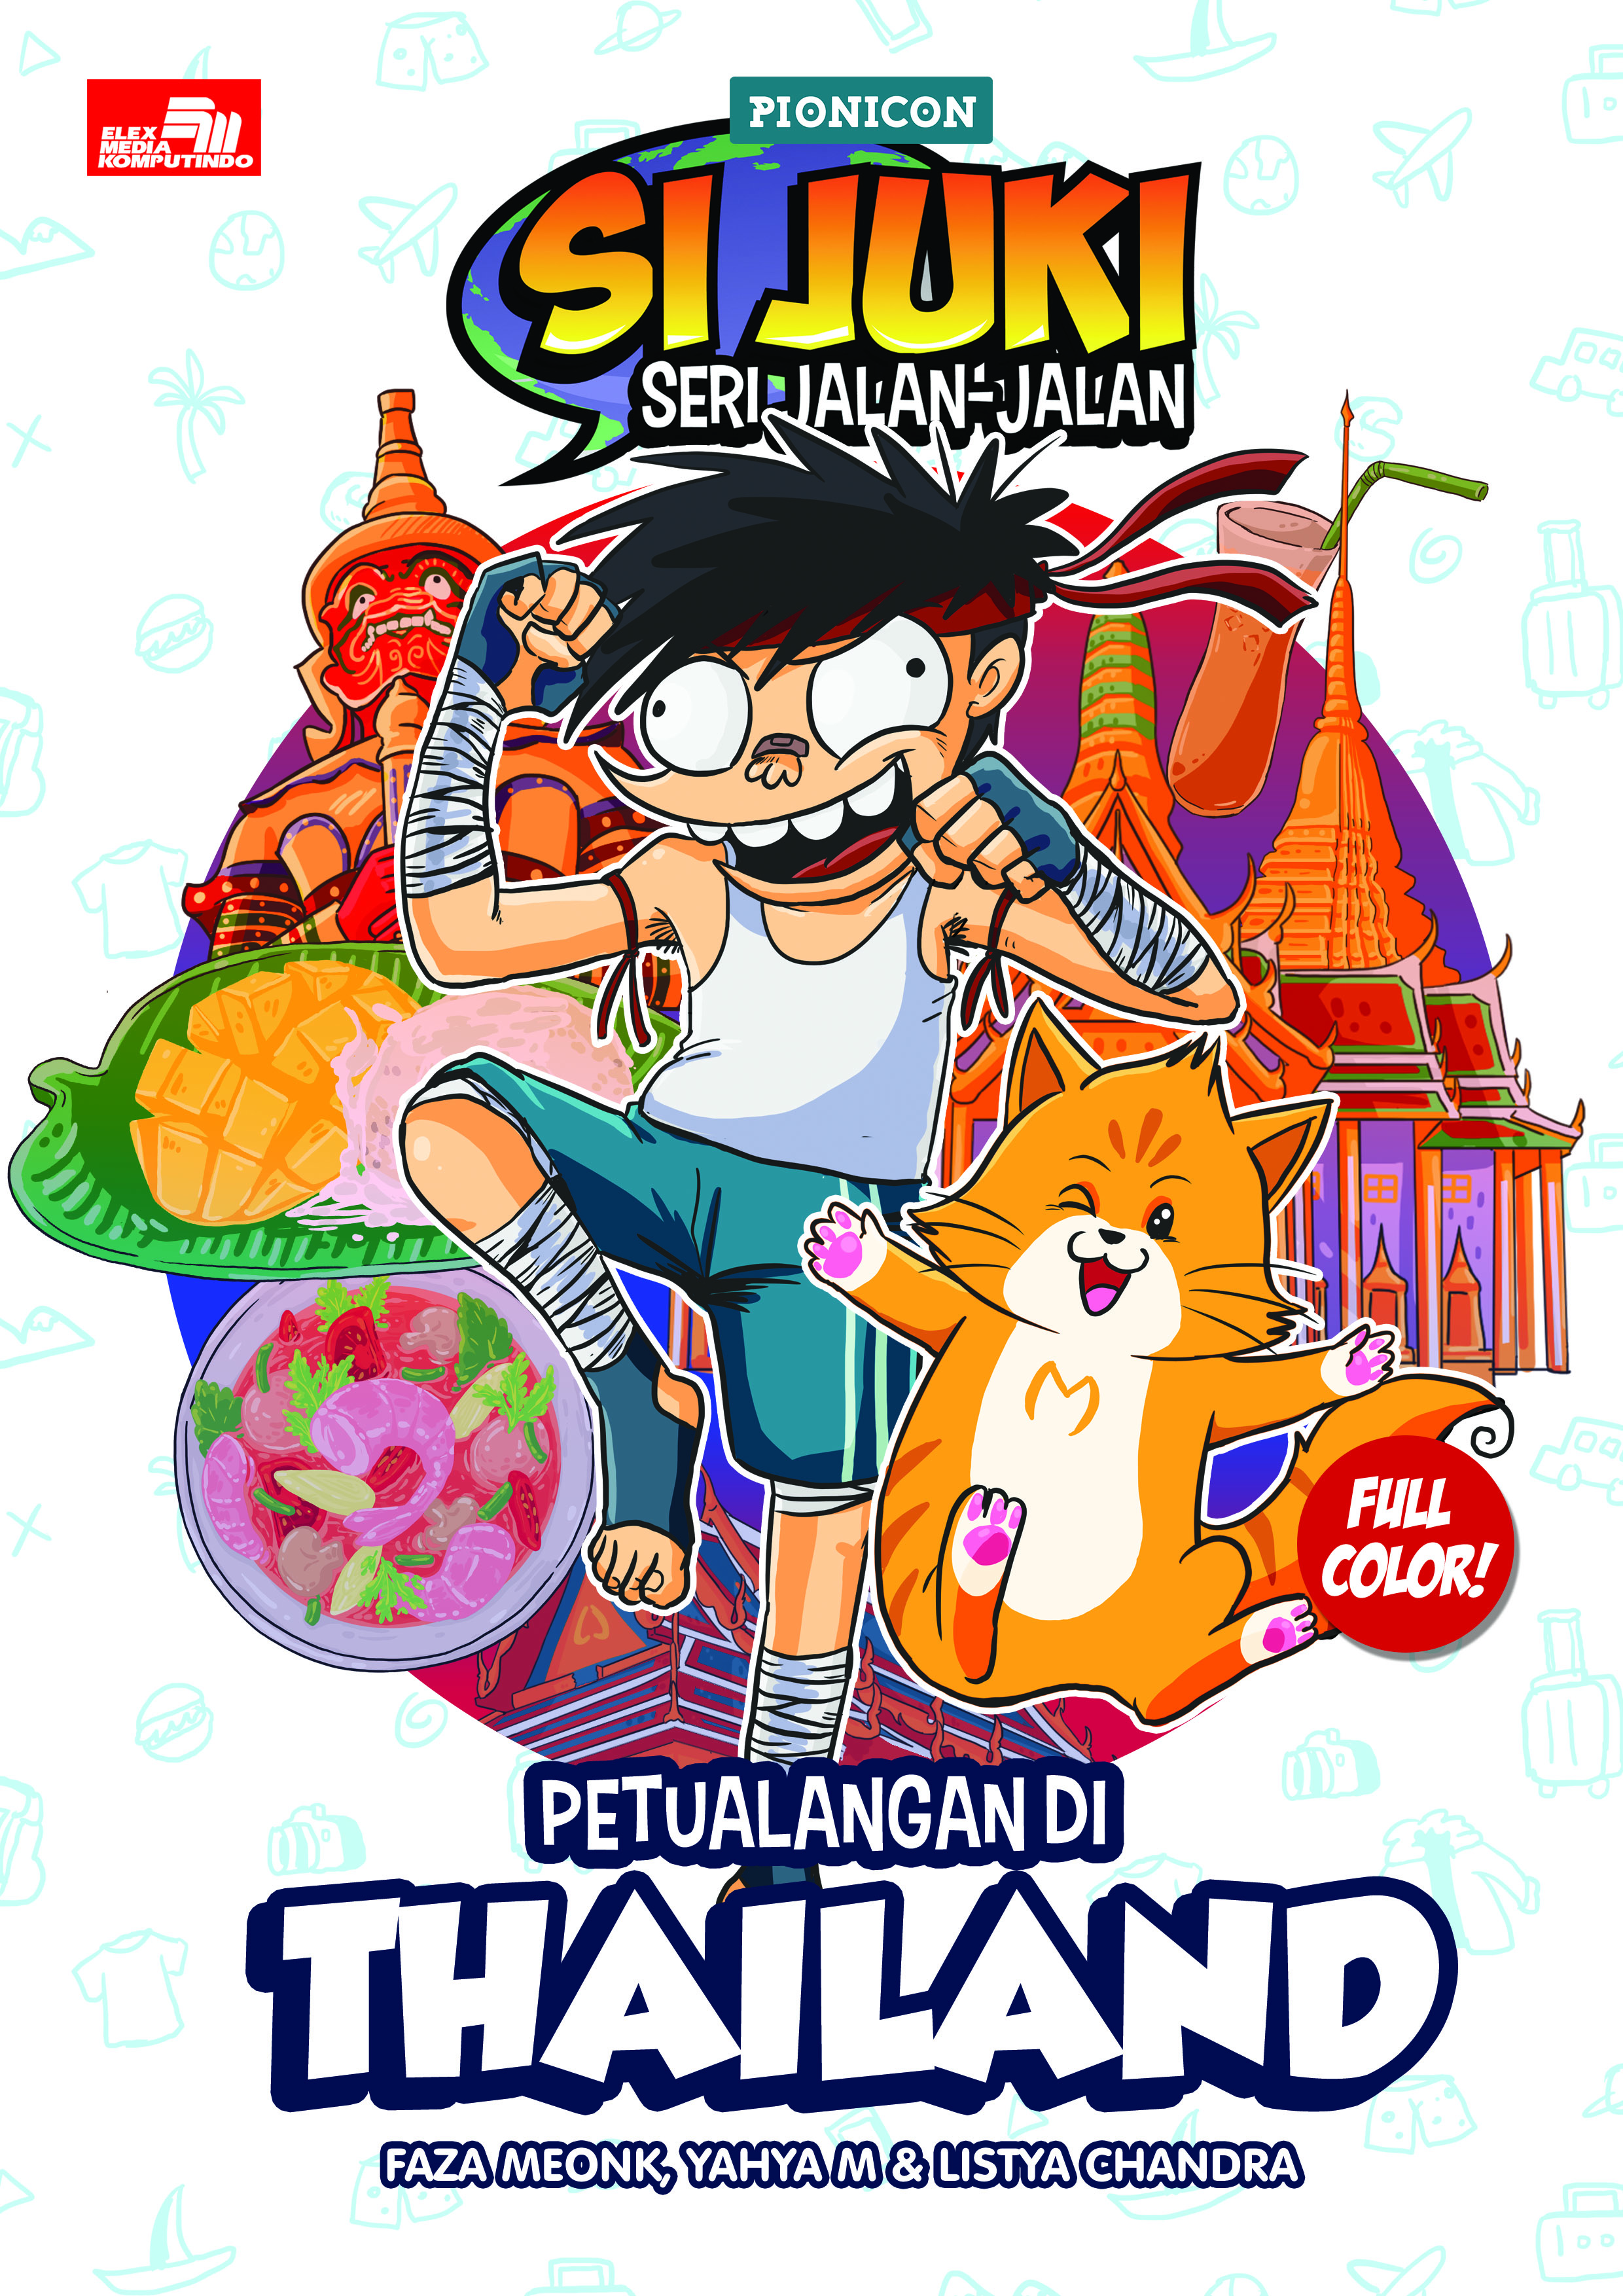 Sampul komik Si Juki Seri Jalan-Jalan Petualangan di Thailand | Foto: PIONICON